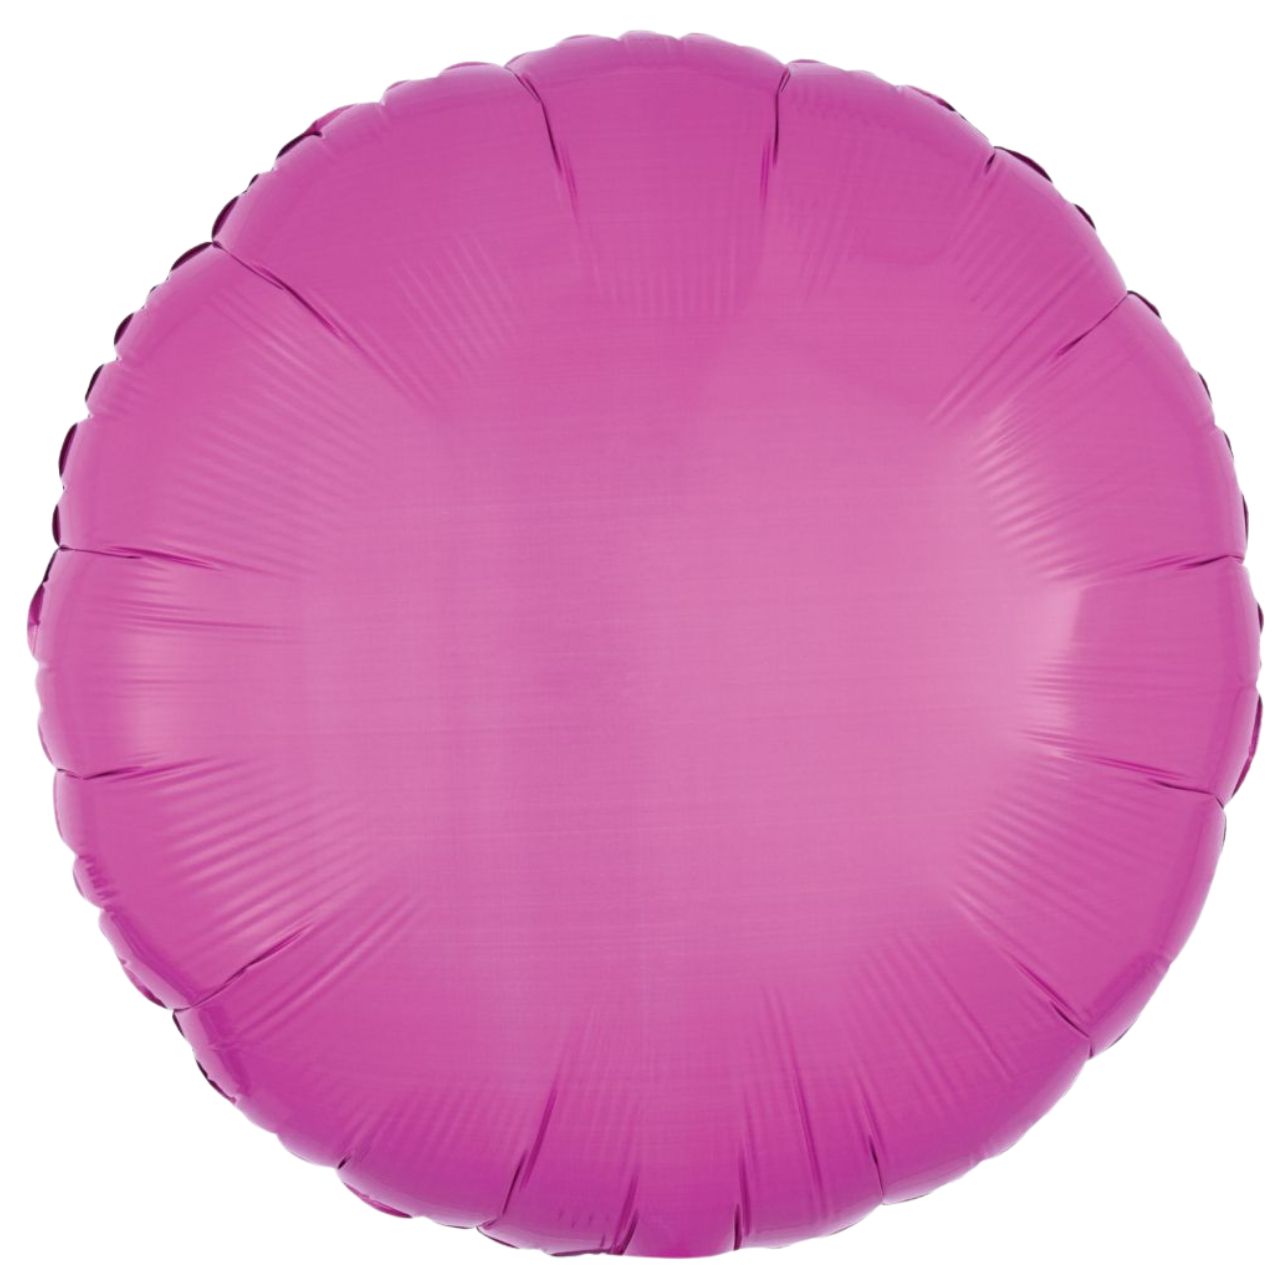 Bright Bubble Gum Hot Pink Foil Round Balloon